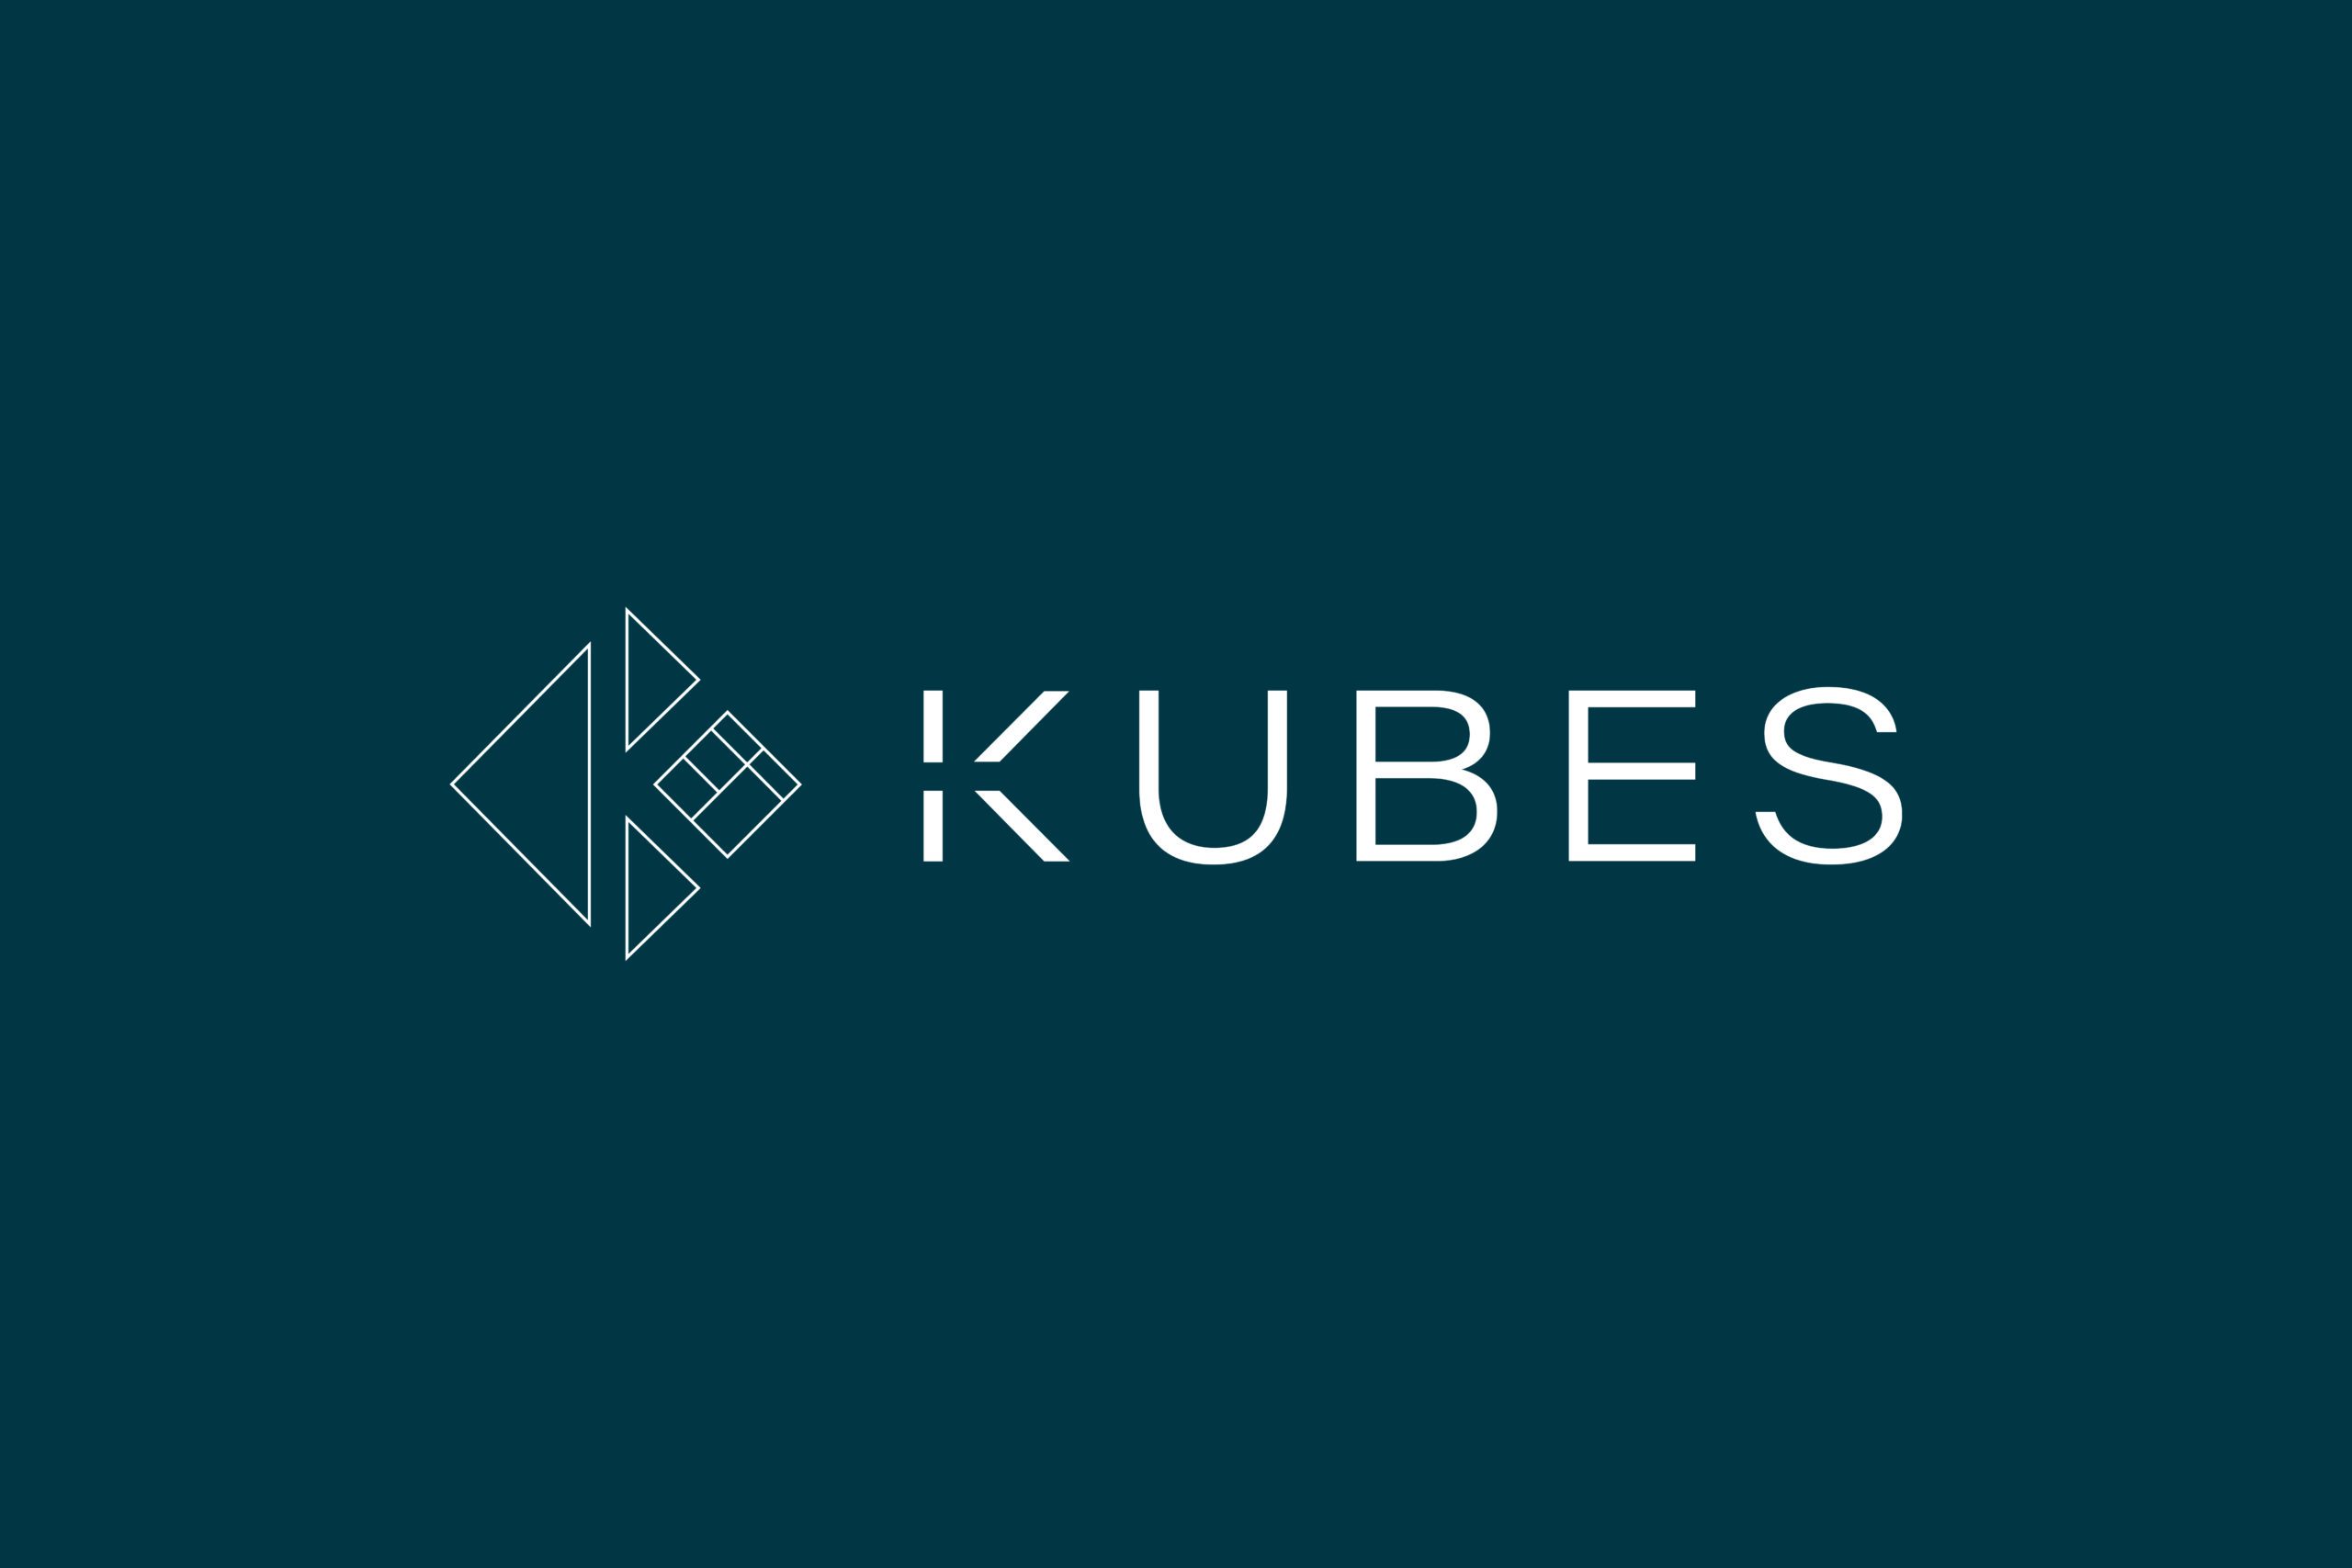 Kubes Logo White Colour On Dark Green Background